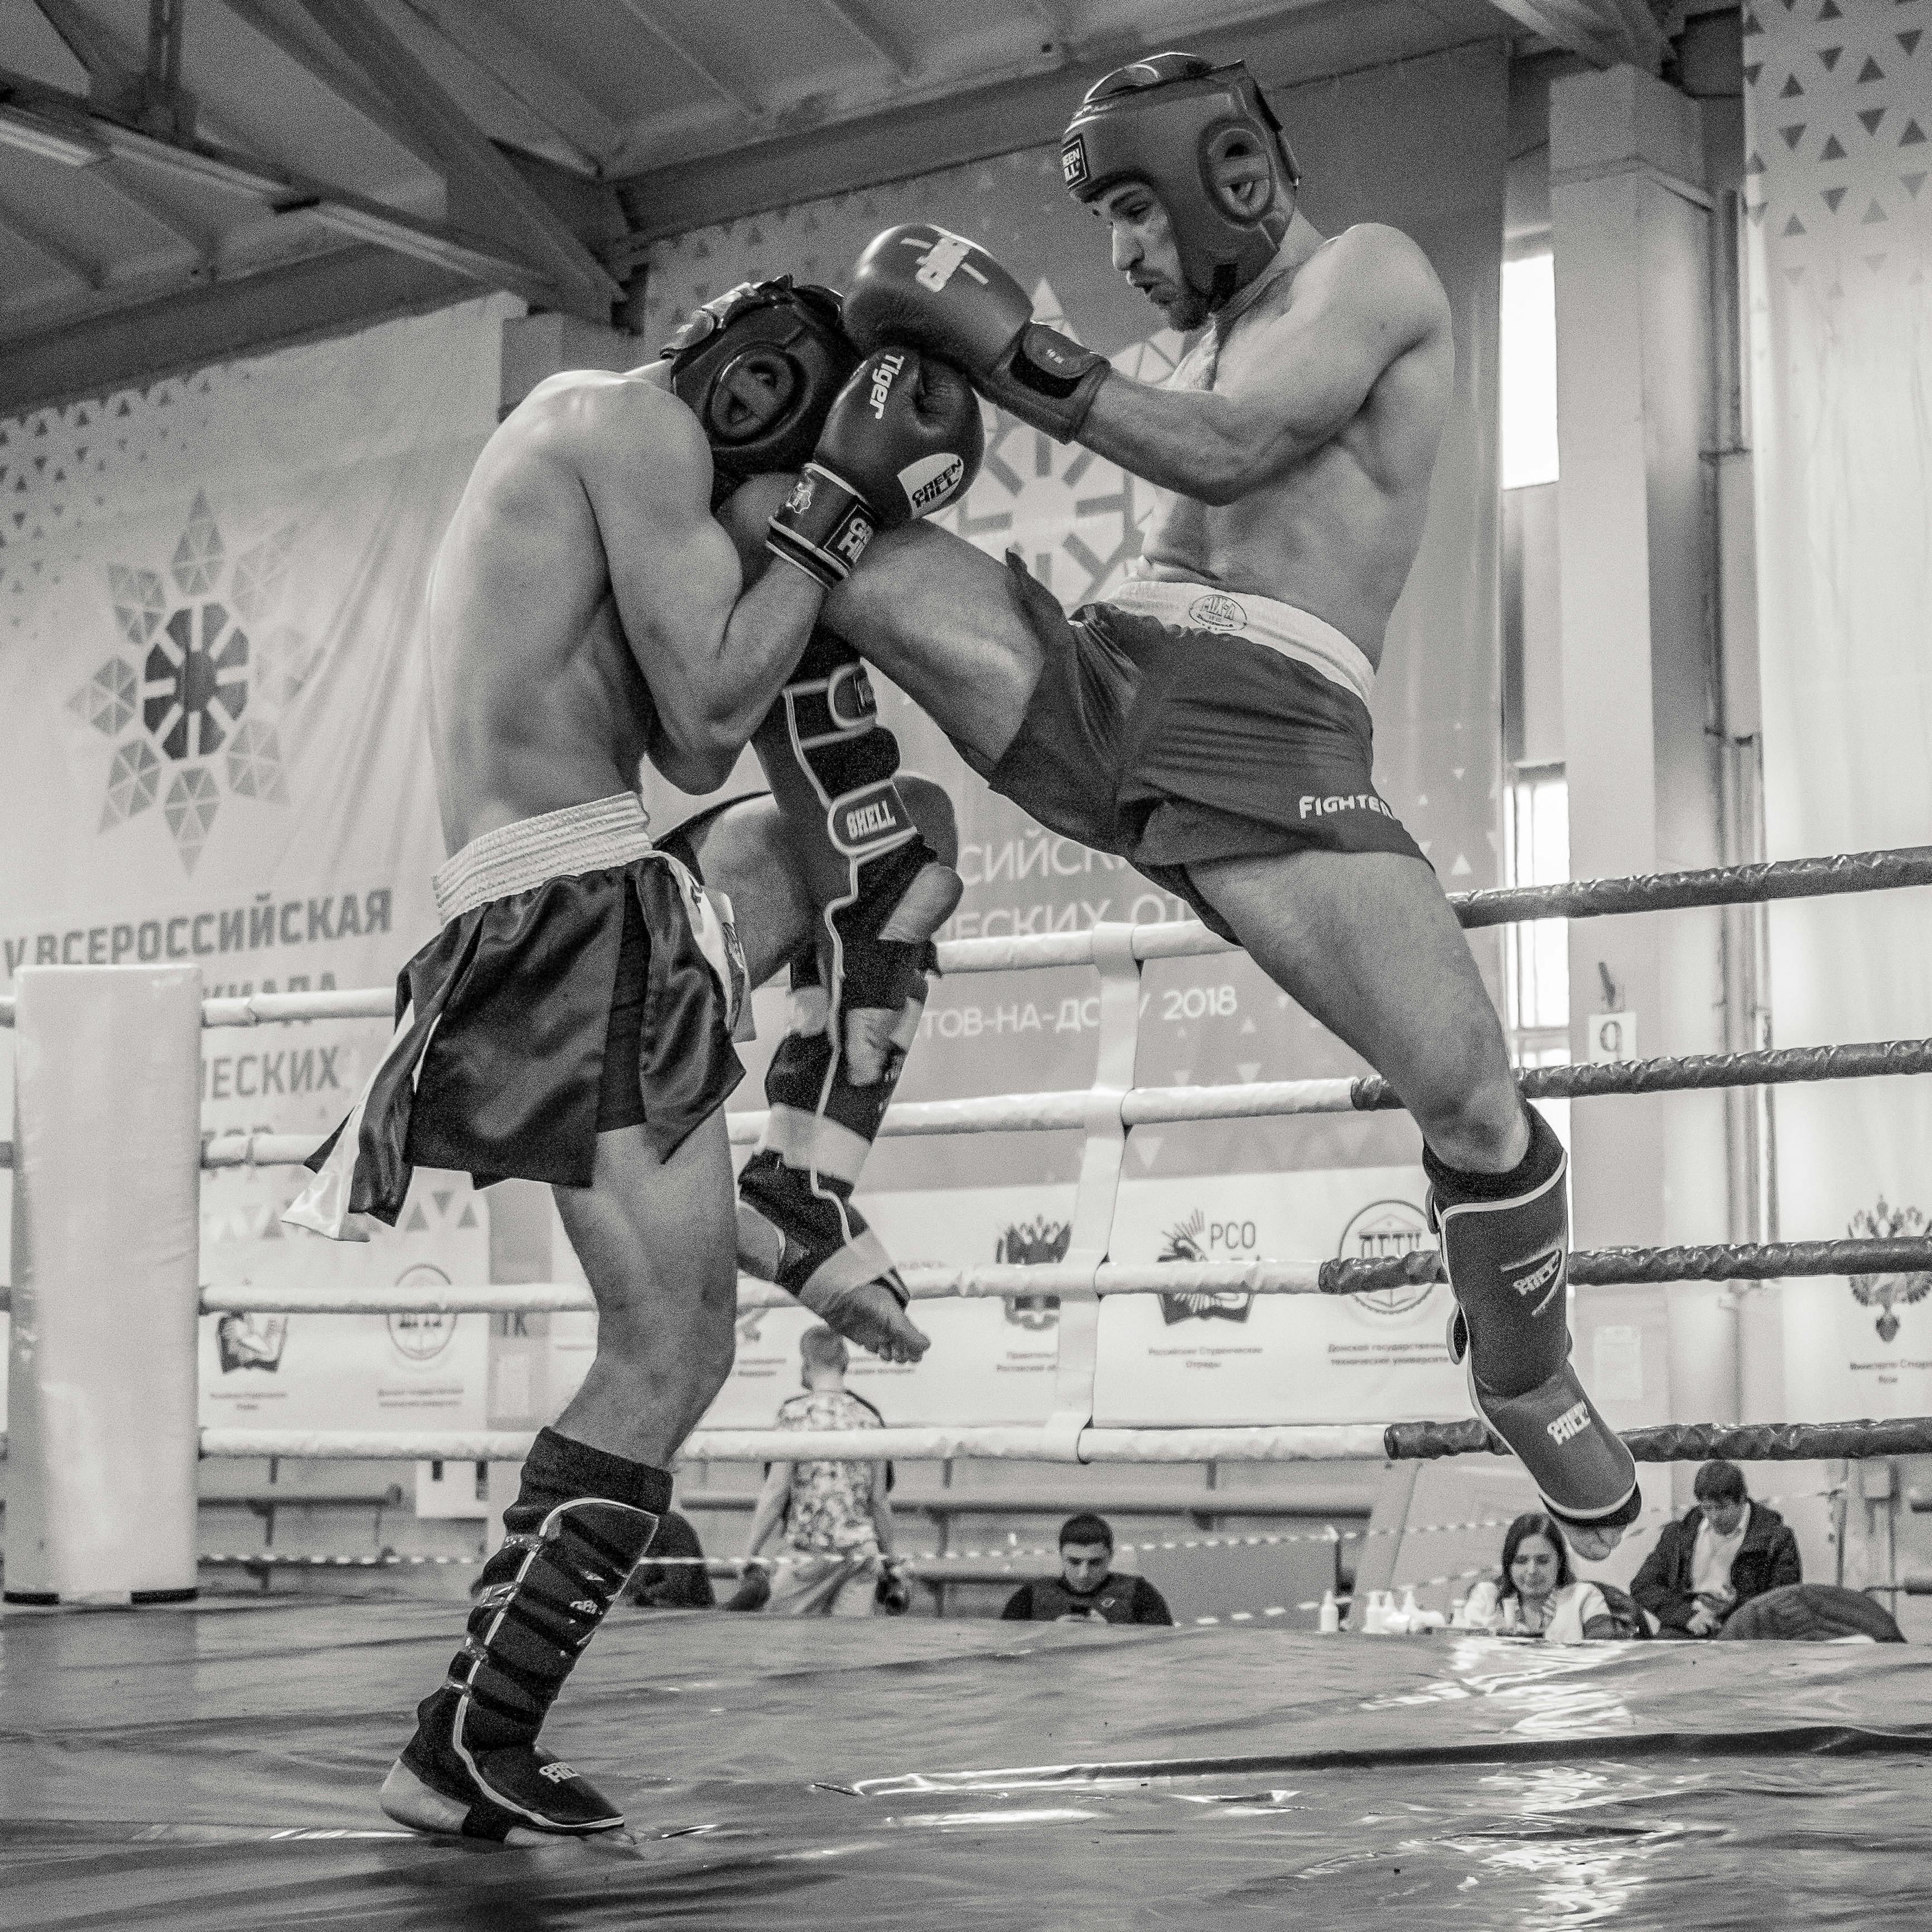 266 Ilustraciones de Kick Boxing - Getty Images